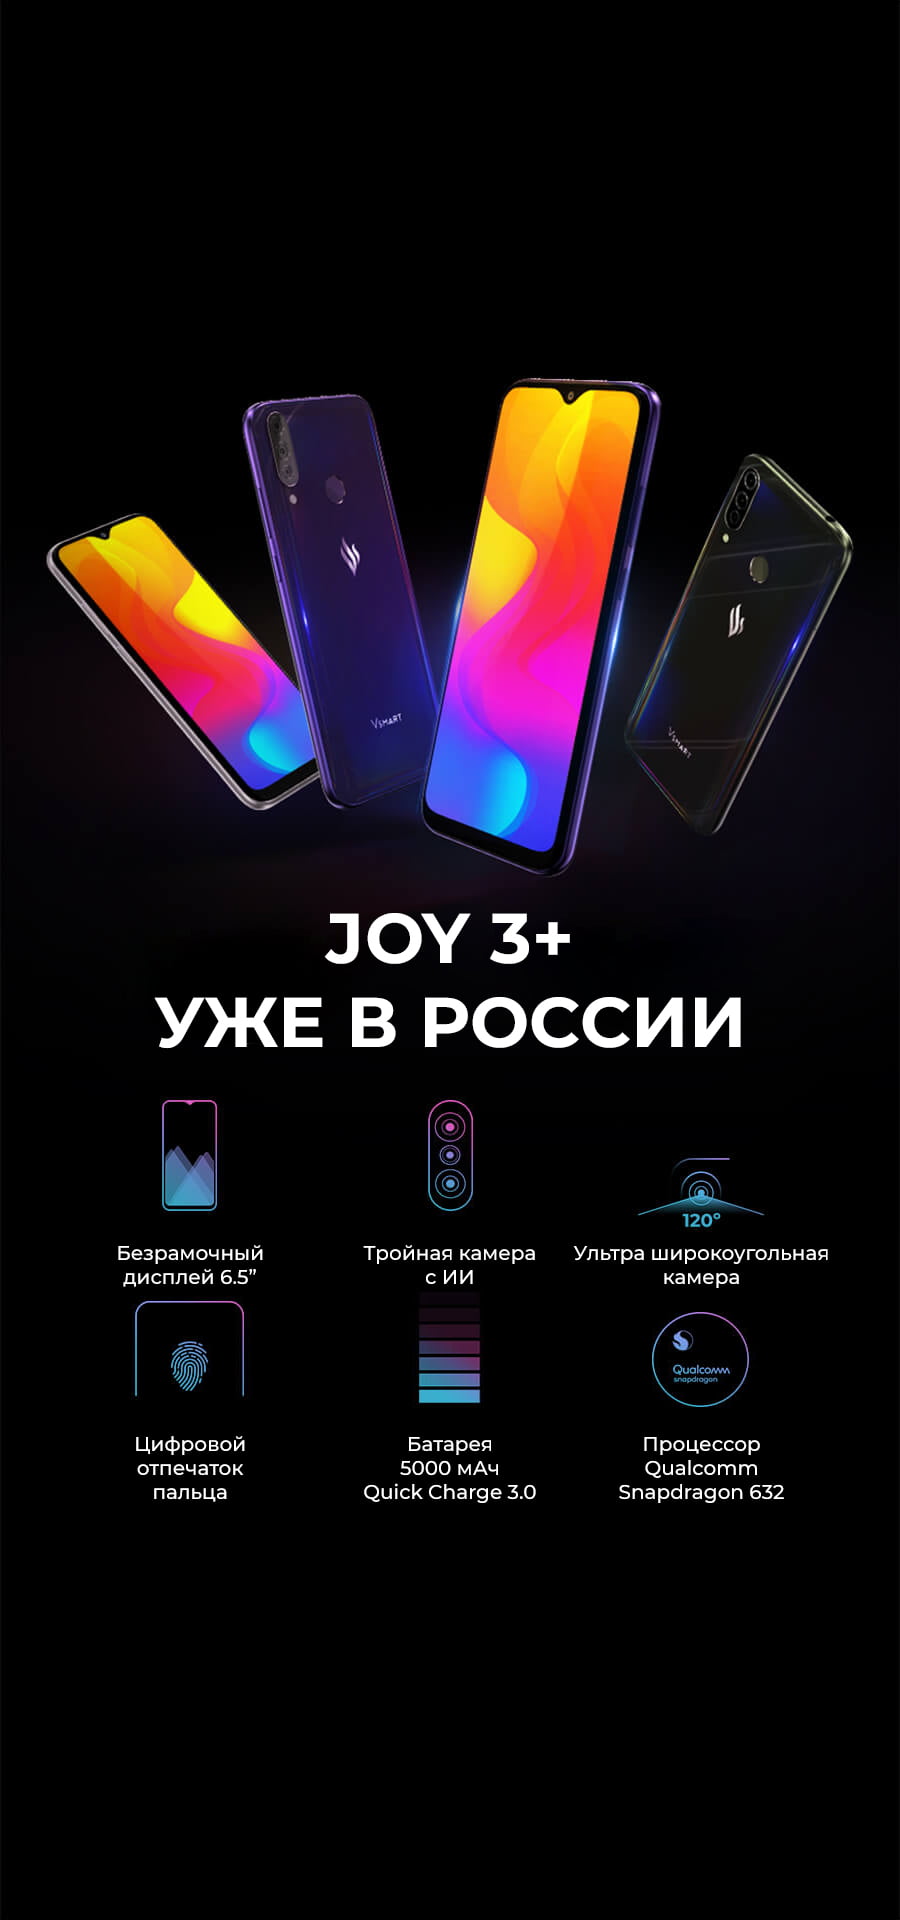 joy-banner-sp-ru.jpg